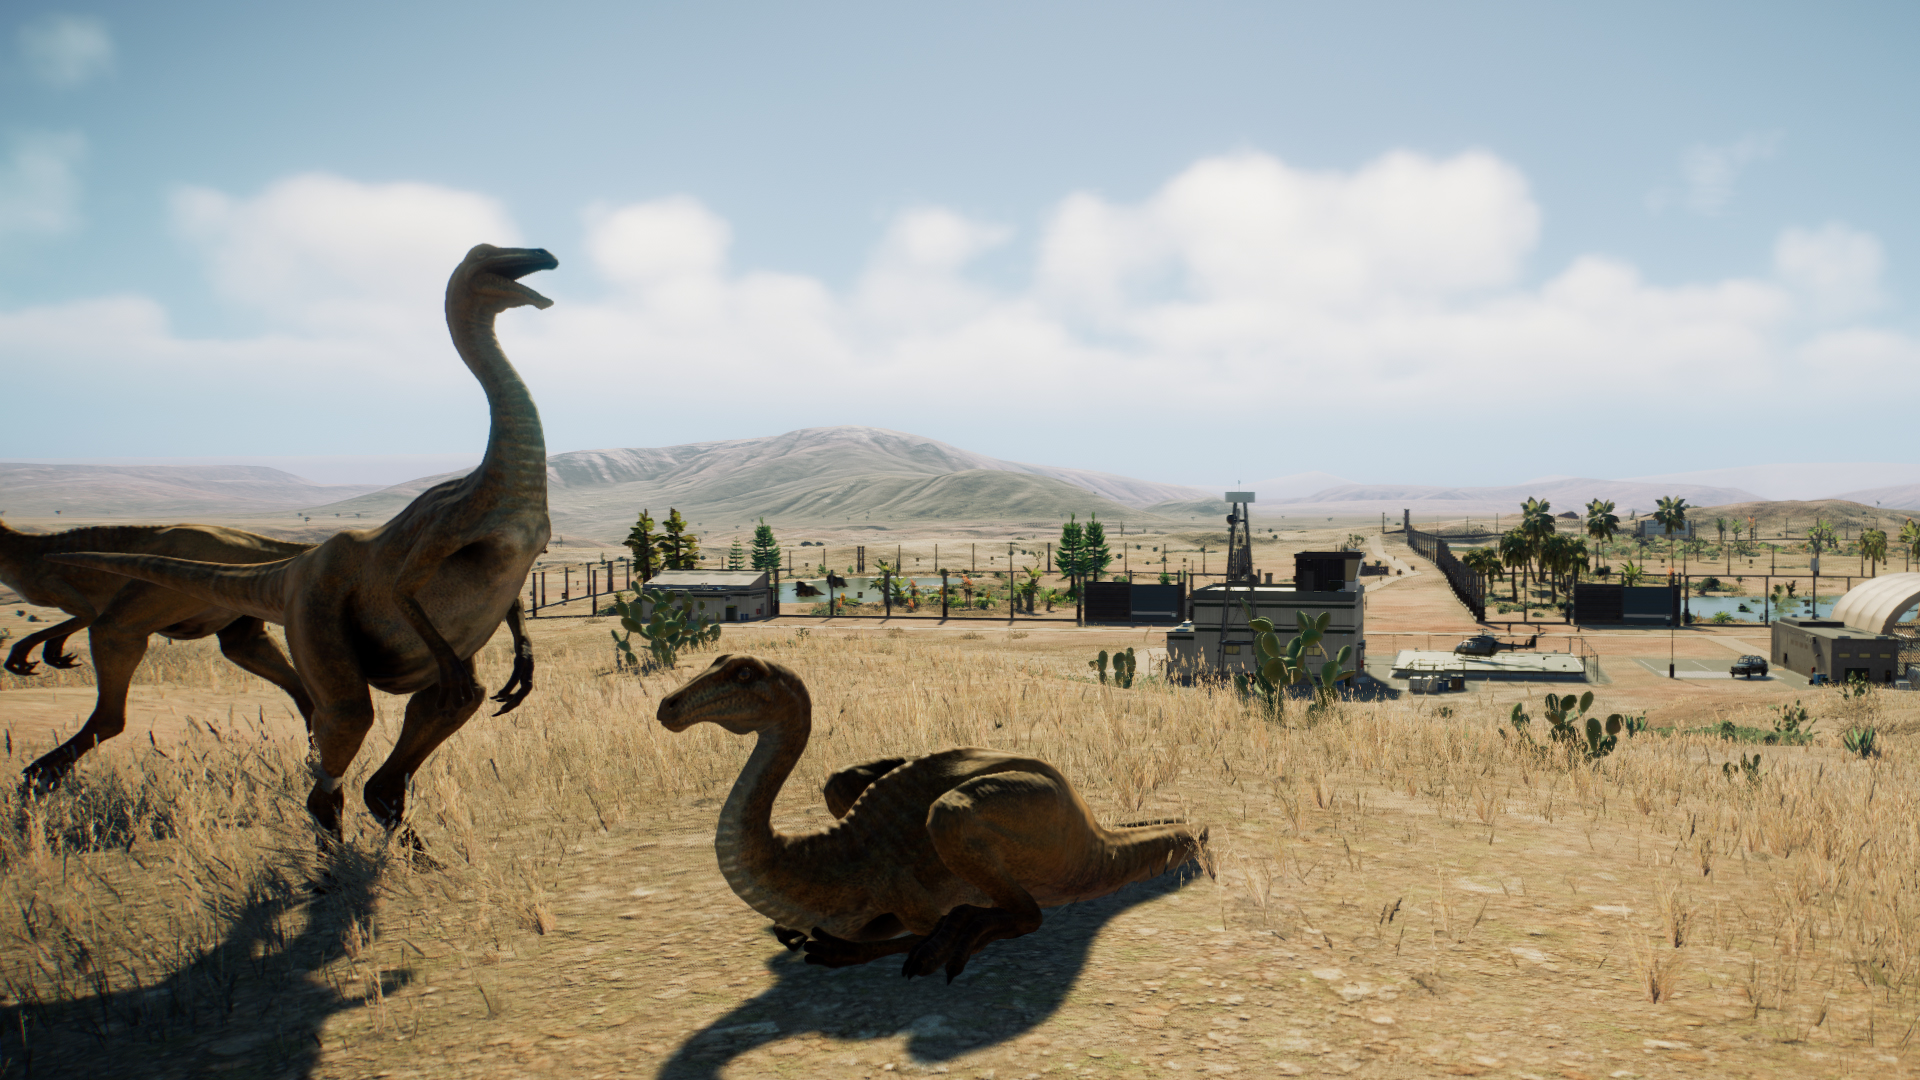 Jurassic World Evolution 2 - Jogos PS4 e PS5